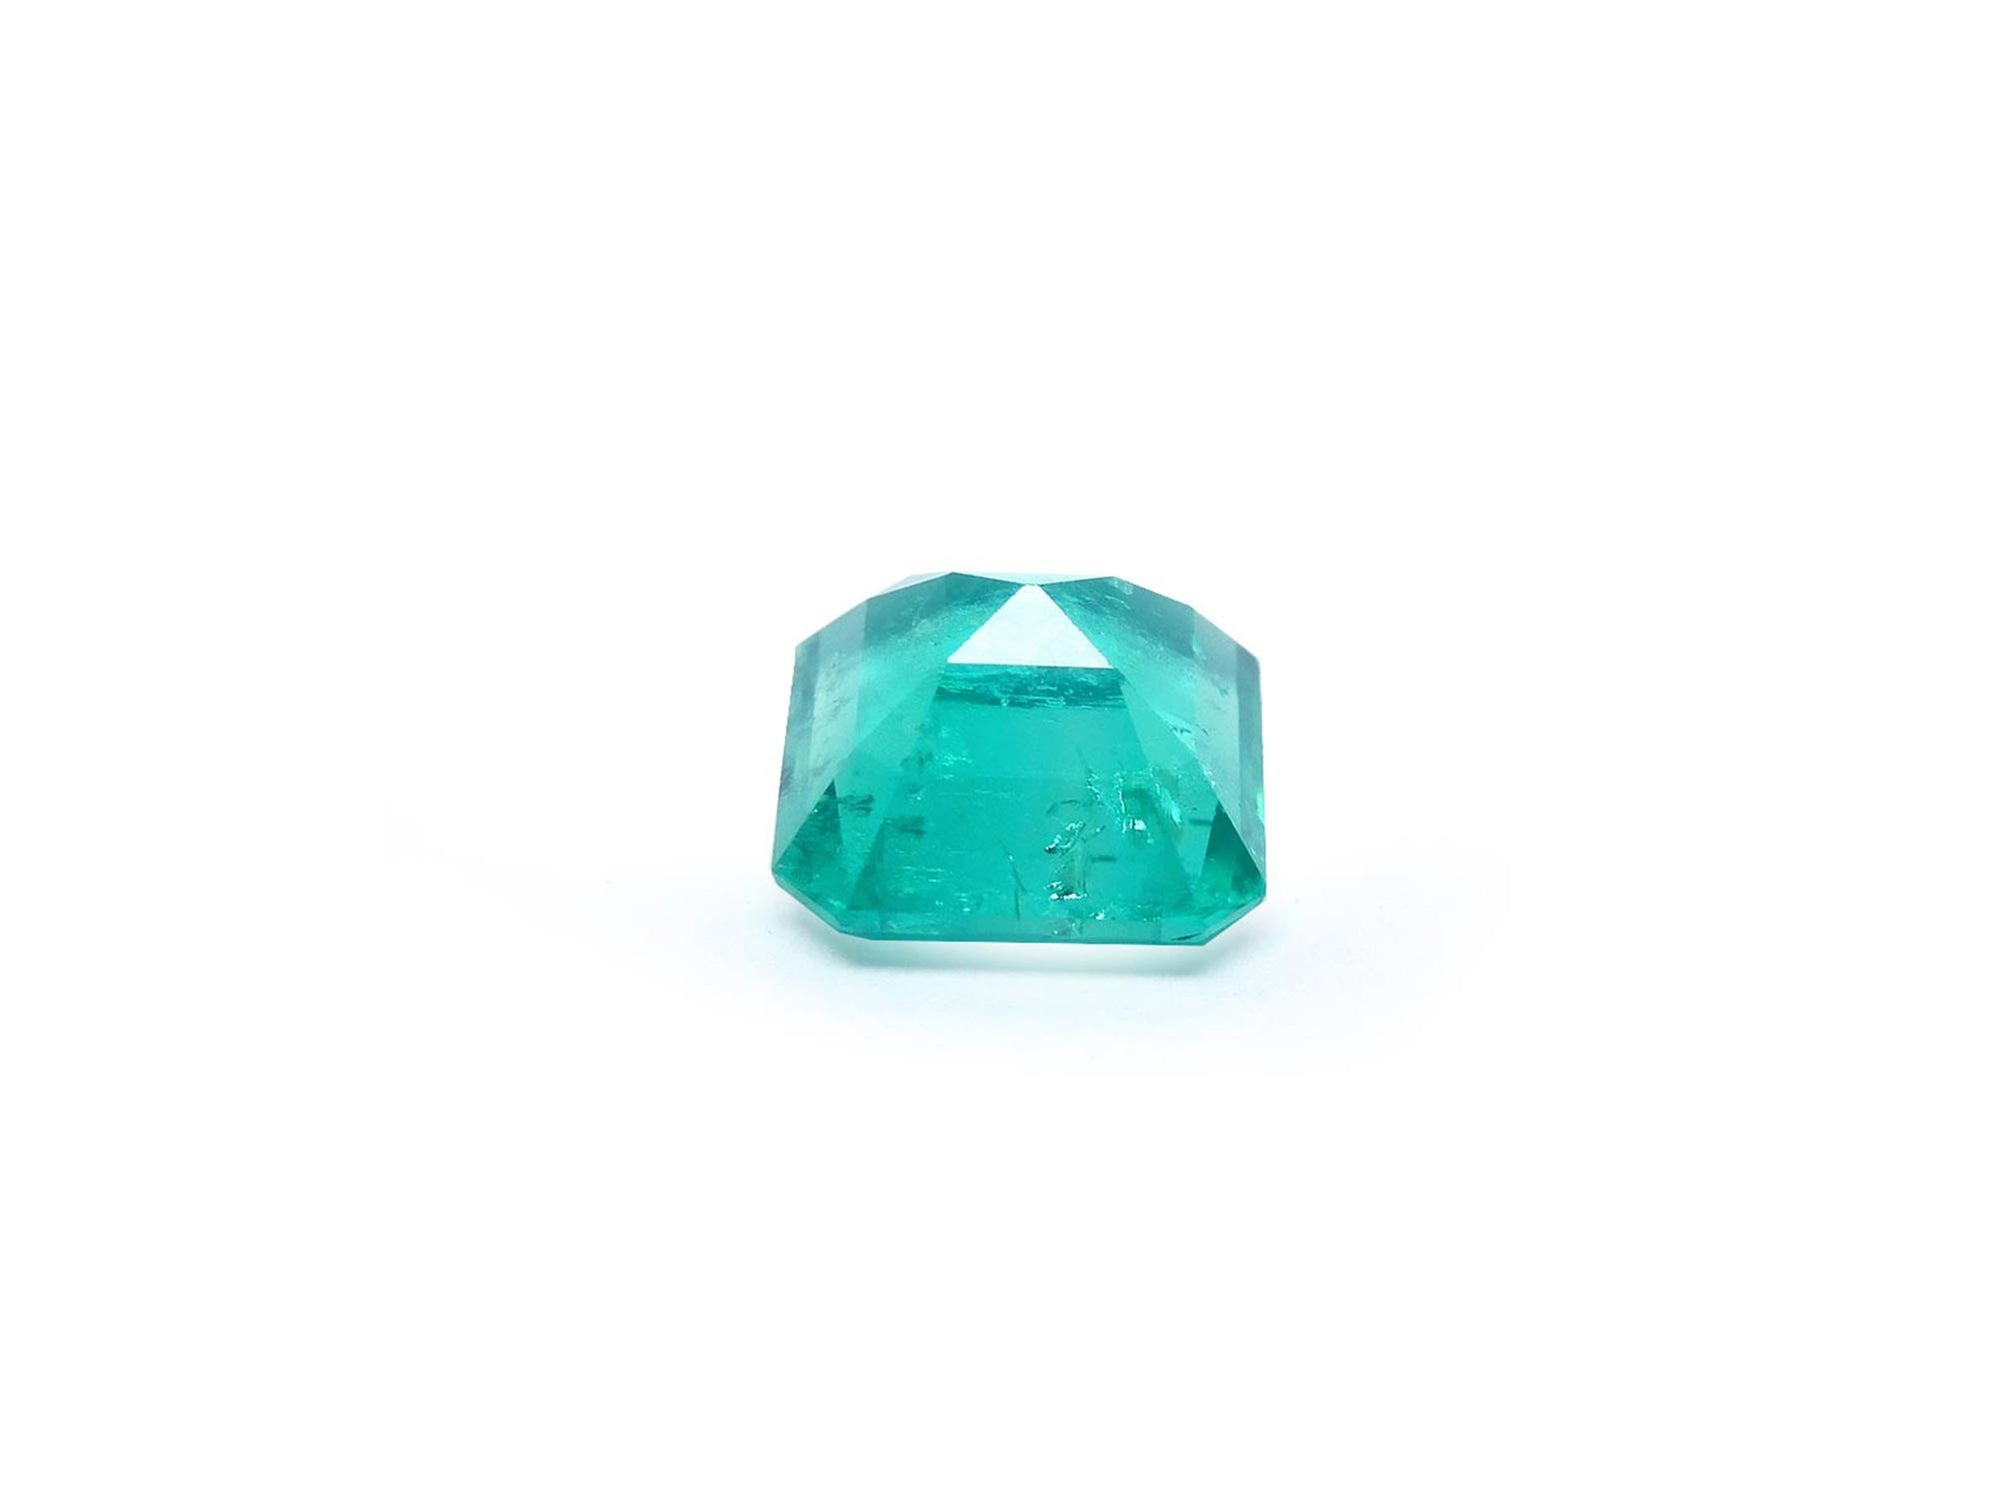 Genuine Colombian emerald